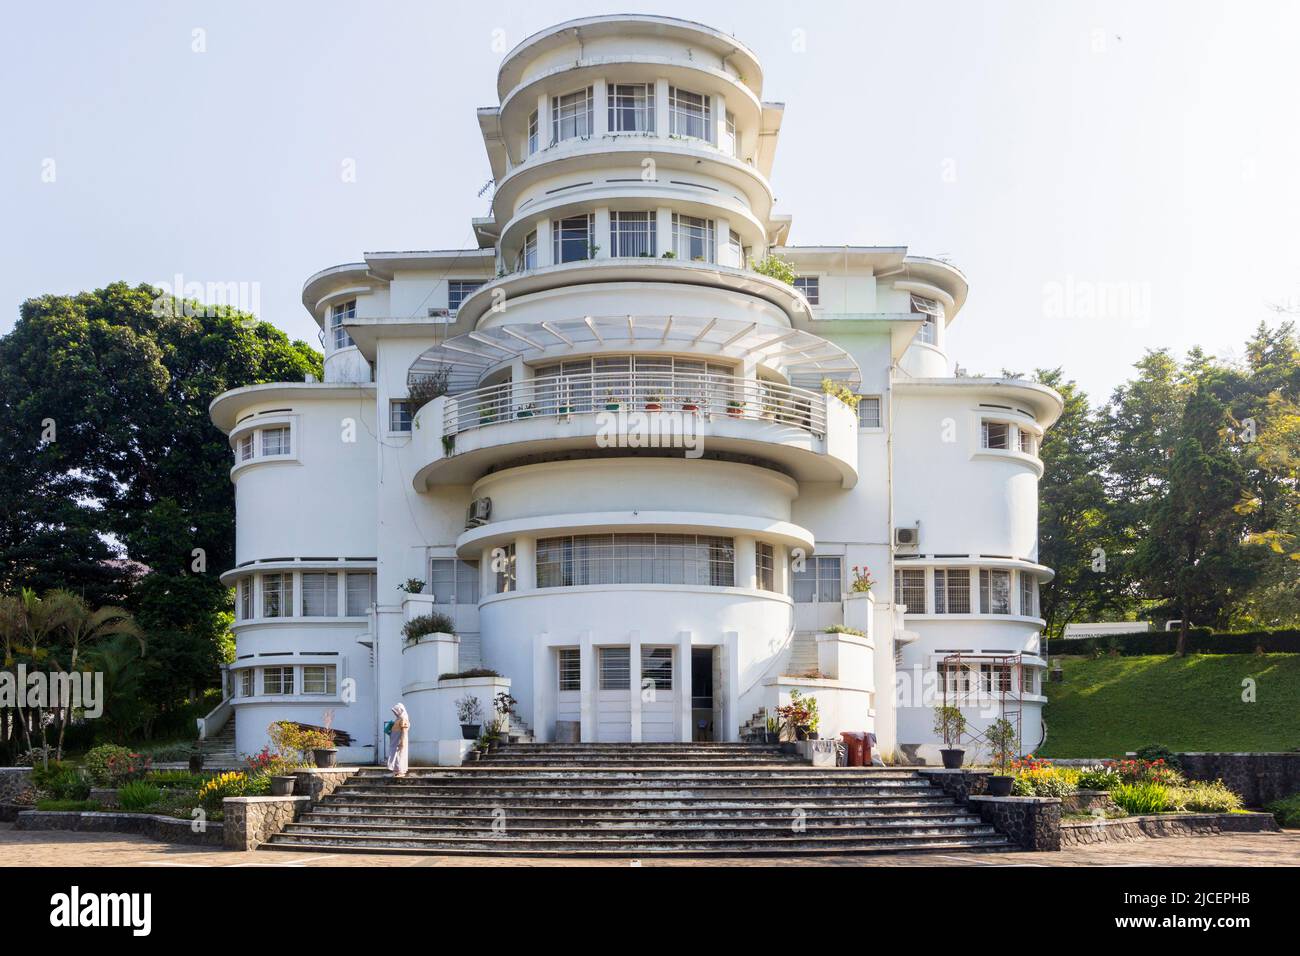 Villa Isola, an art deco architecture in Bandung, Indonesia Stock Photo